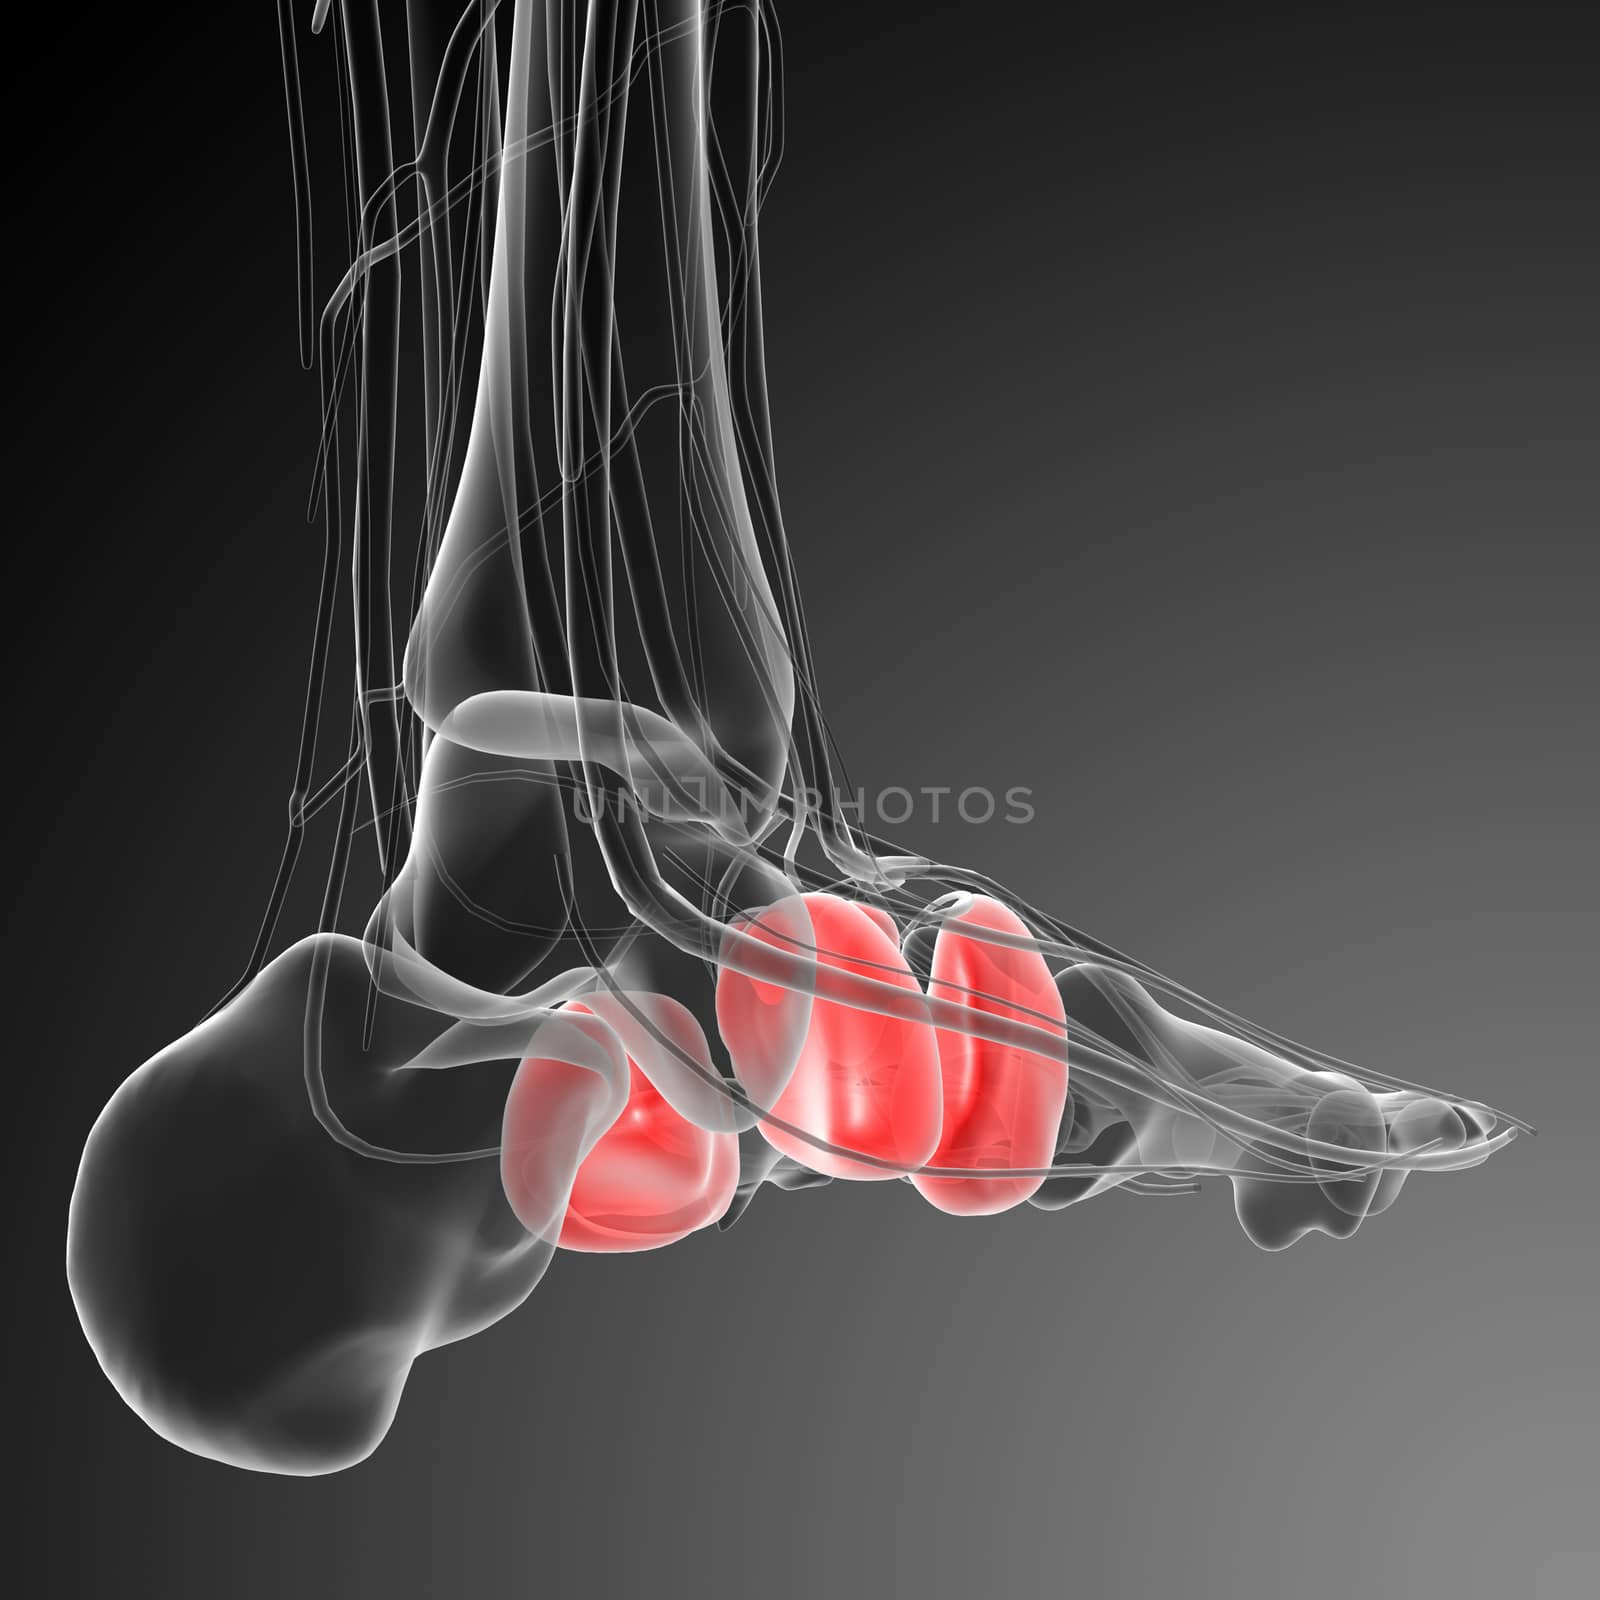 3d render medical illustration of the midfoot bone - back view